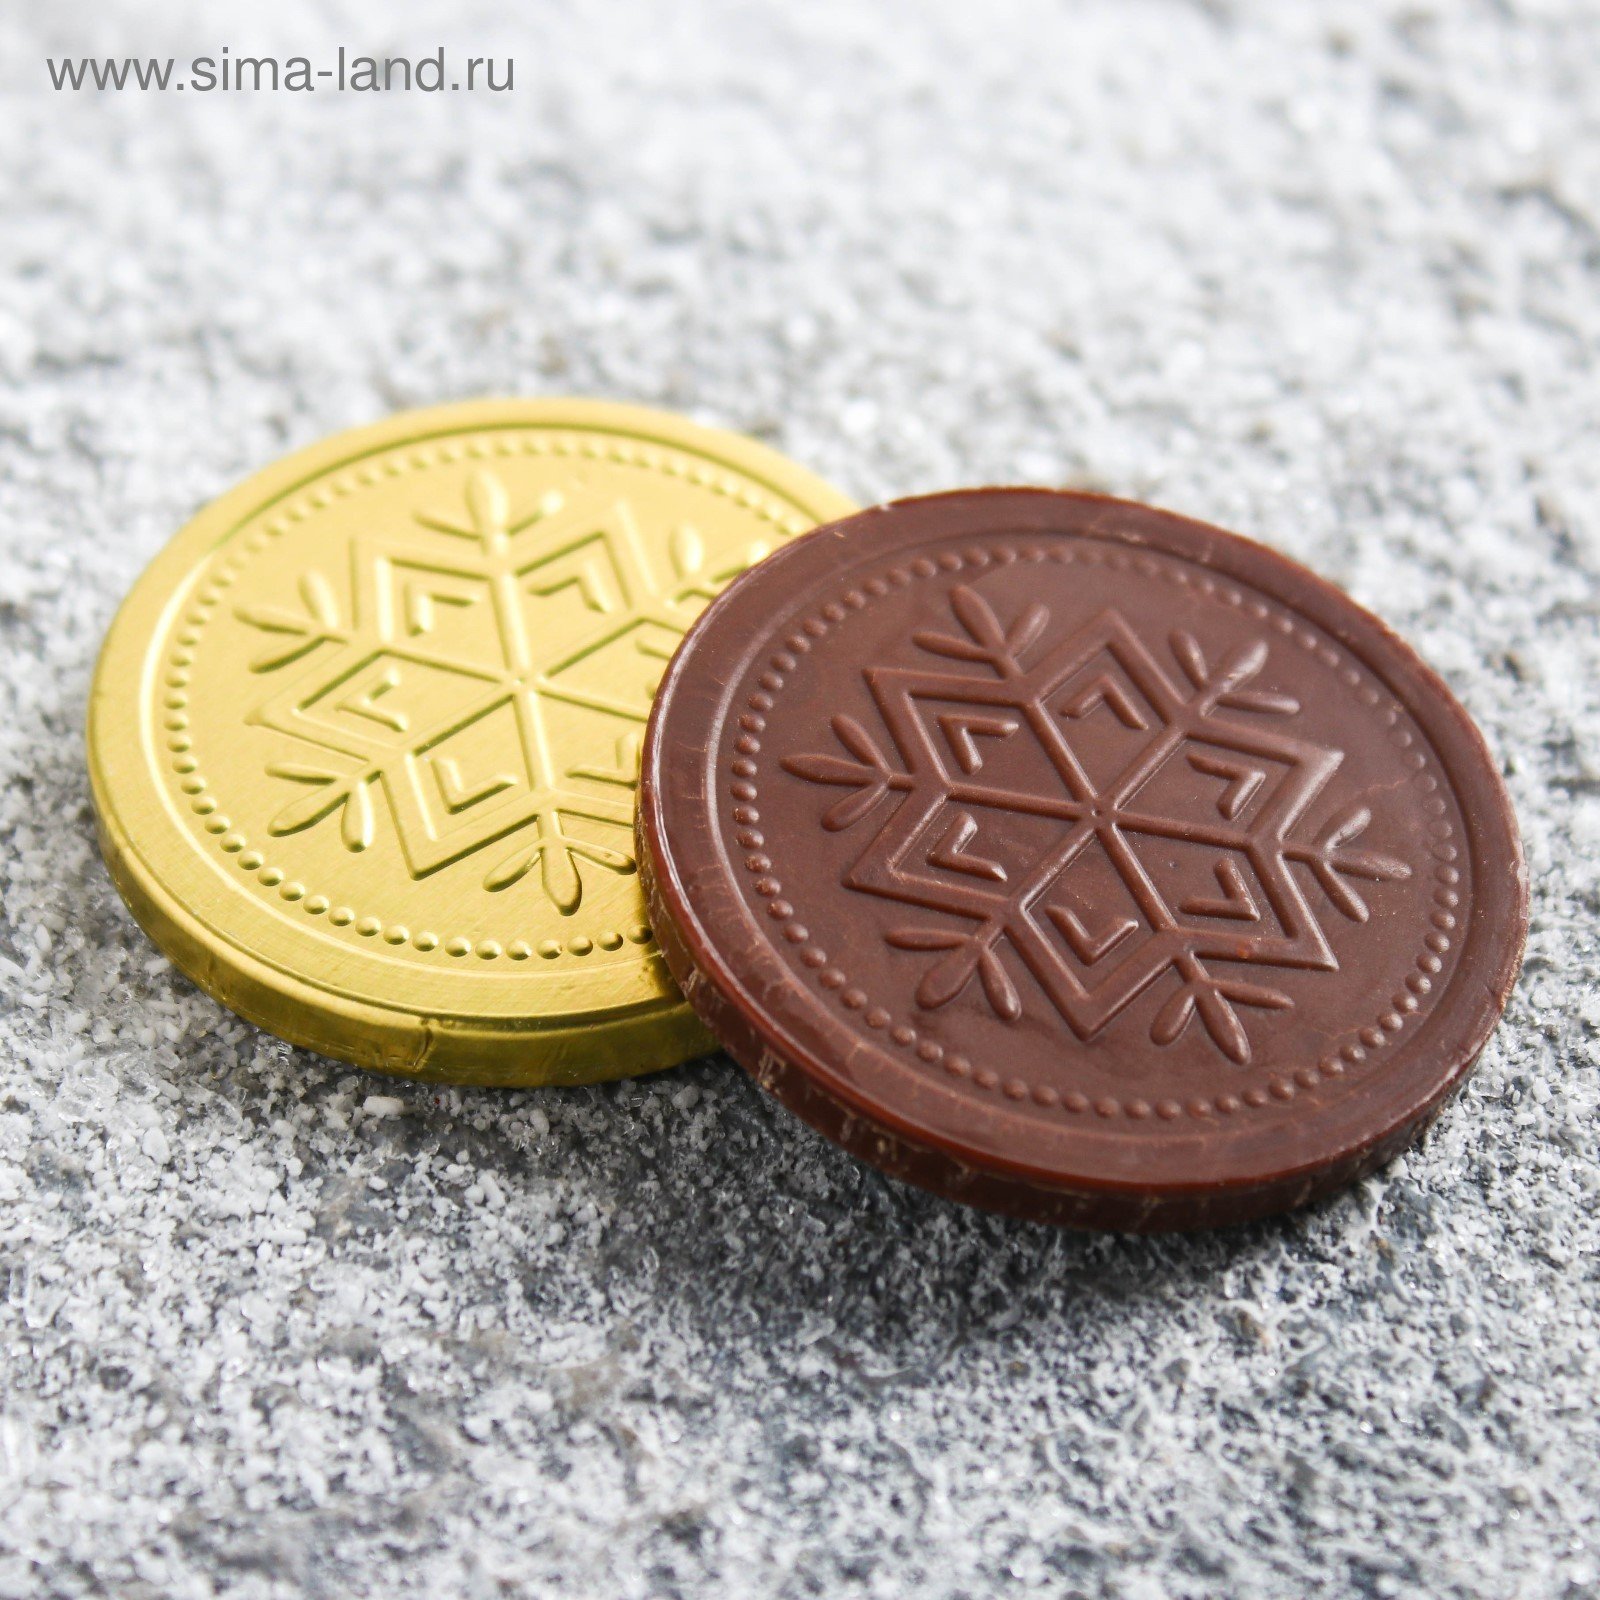 Шоколадка монета. Шоколадные монеты. Шоколад Монетка. Шоколадная монета Новогодняя.